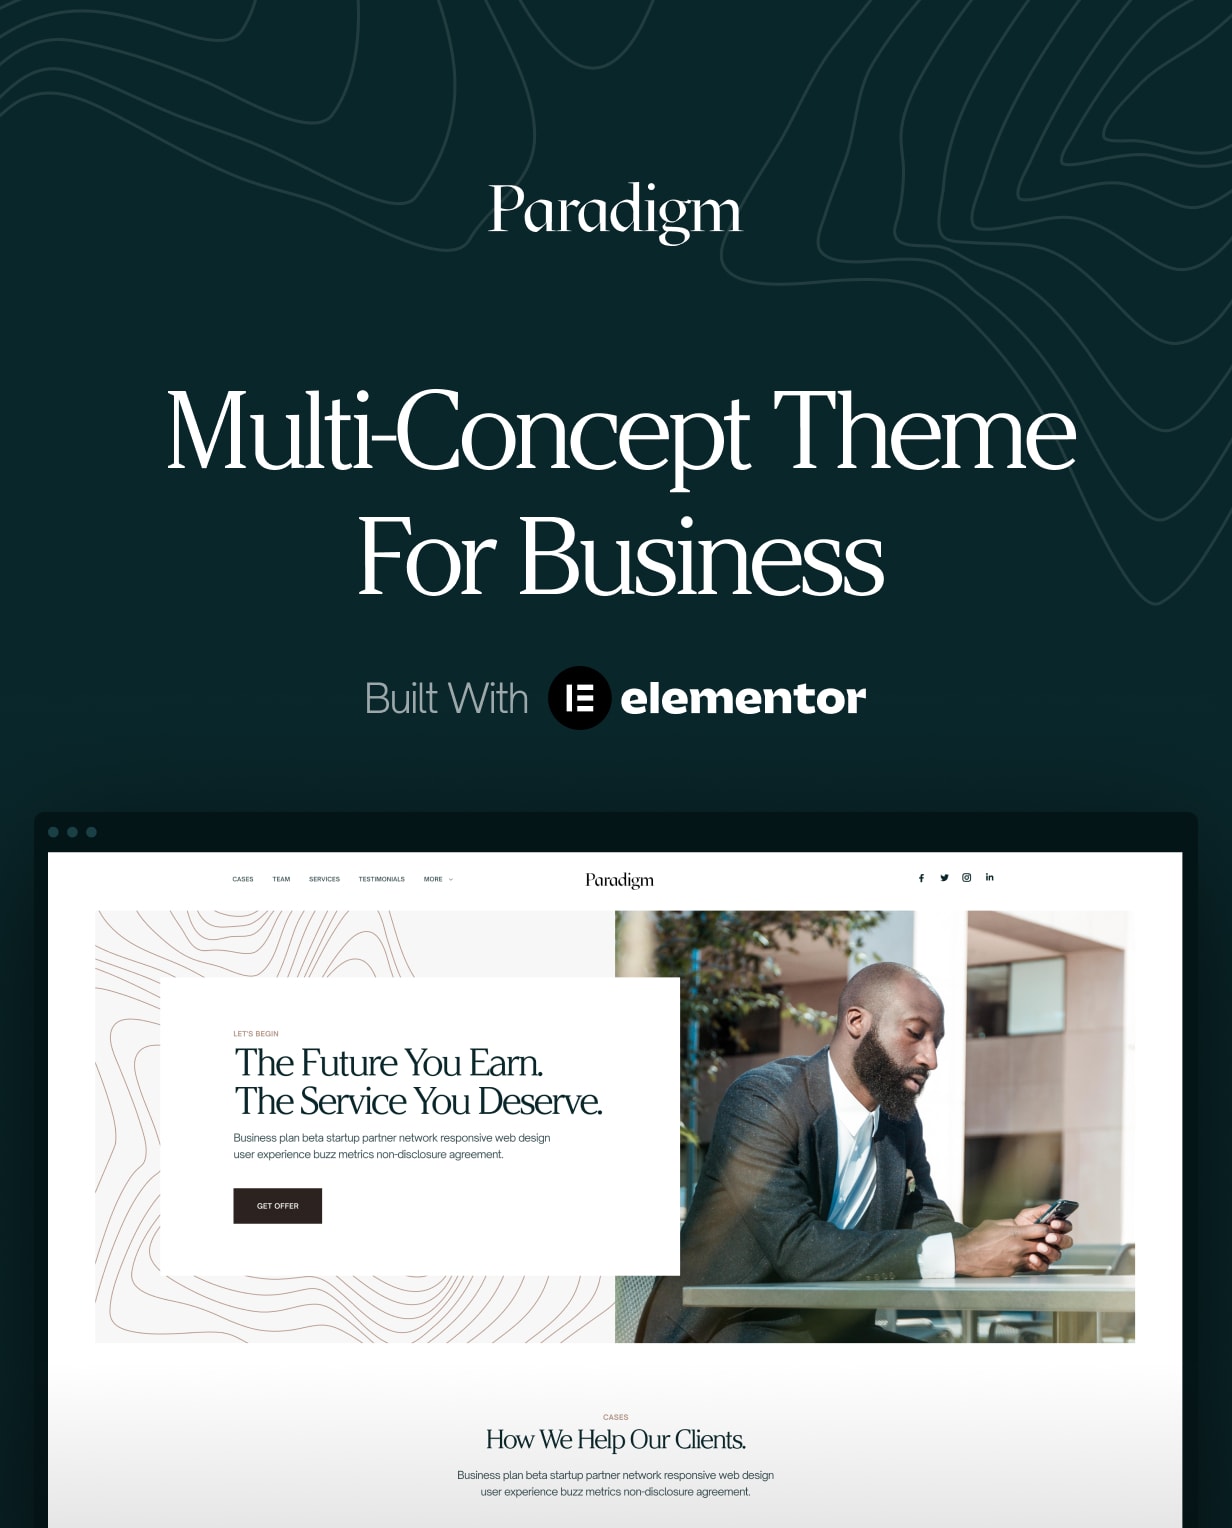 Paradigm - Multi-Concept Theme For Business - 1